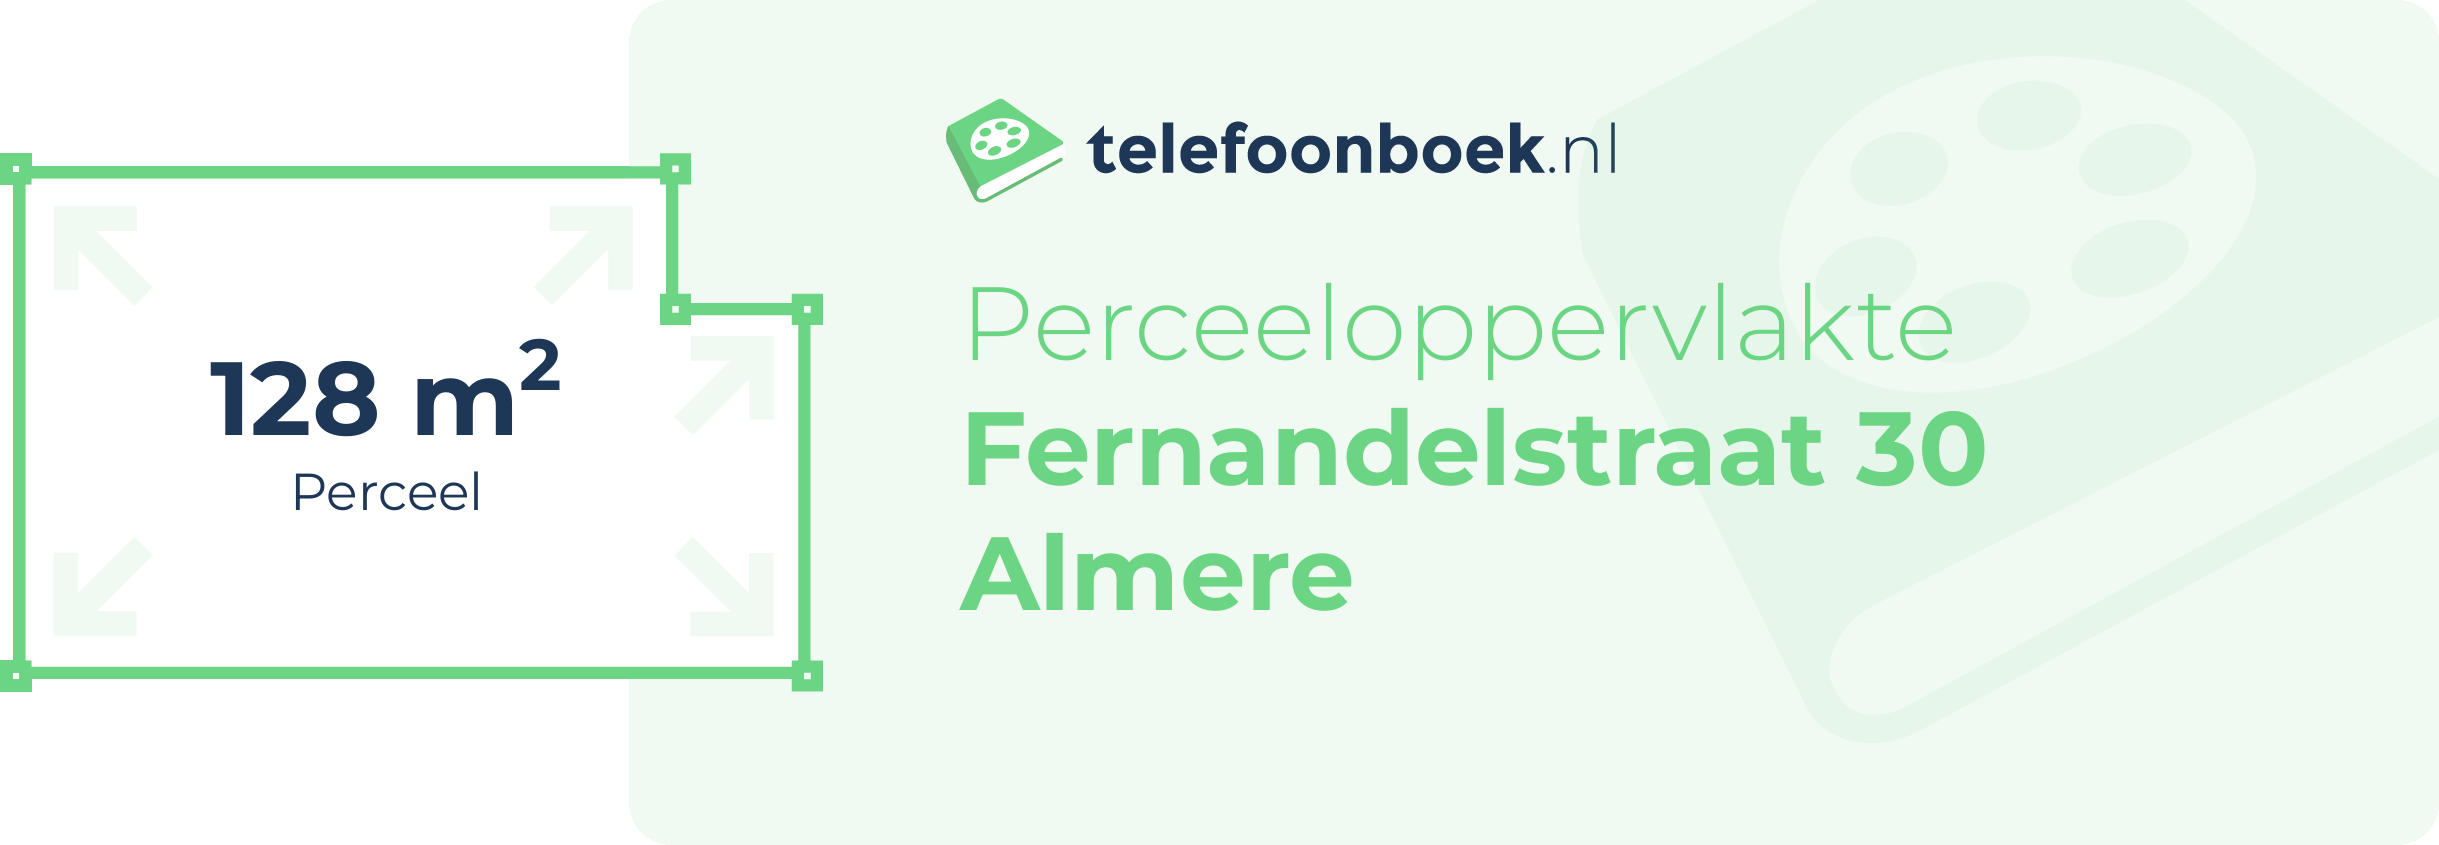 Perceeloppervlakte Fernandelstraat 30 Almere